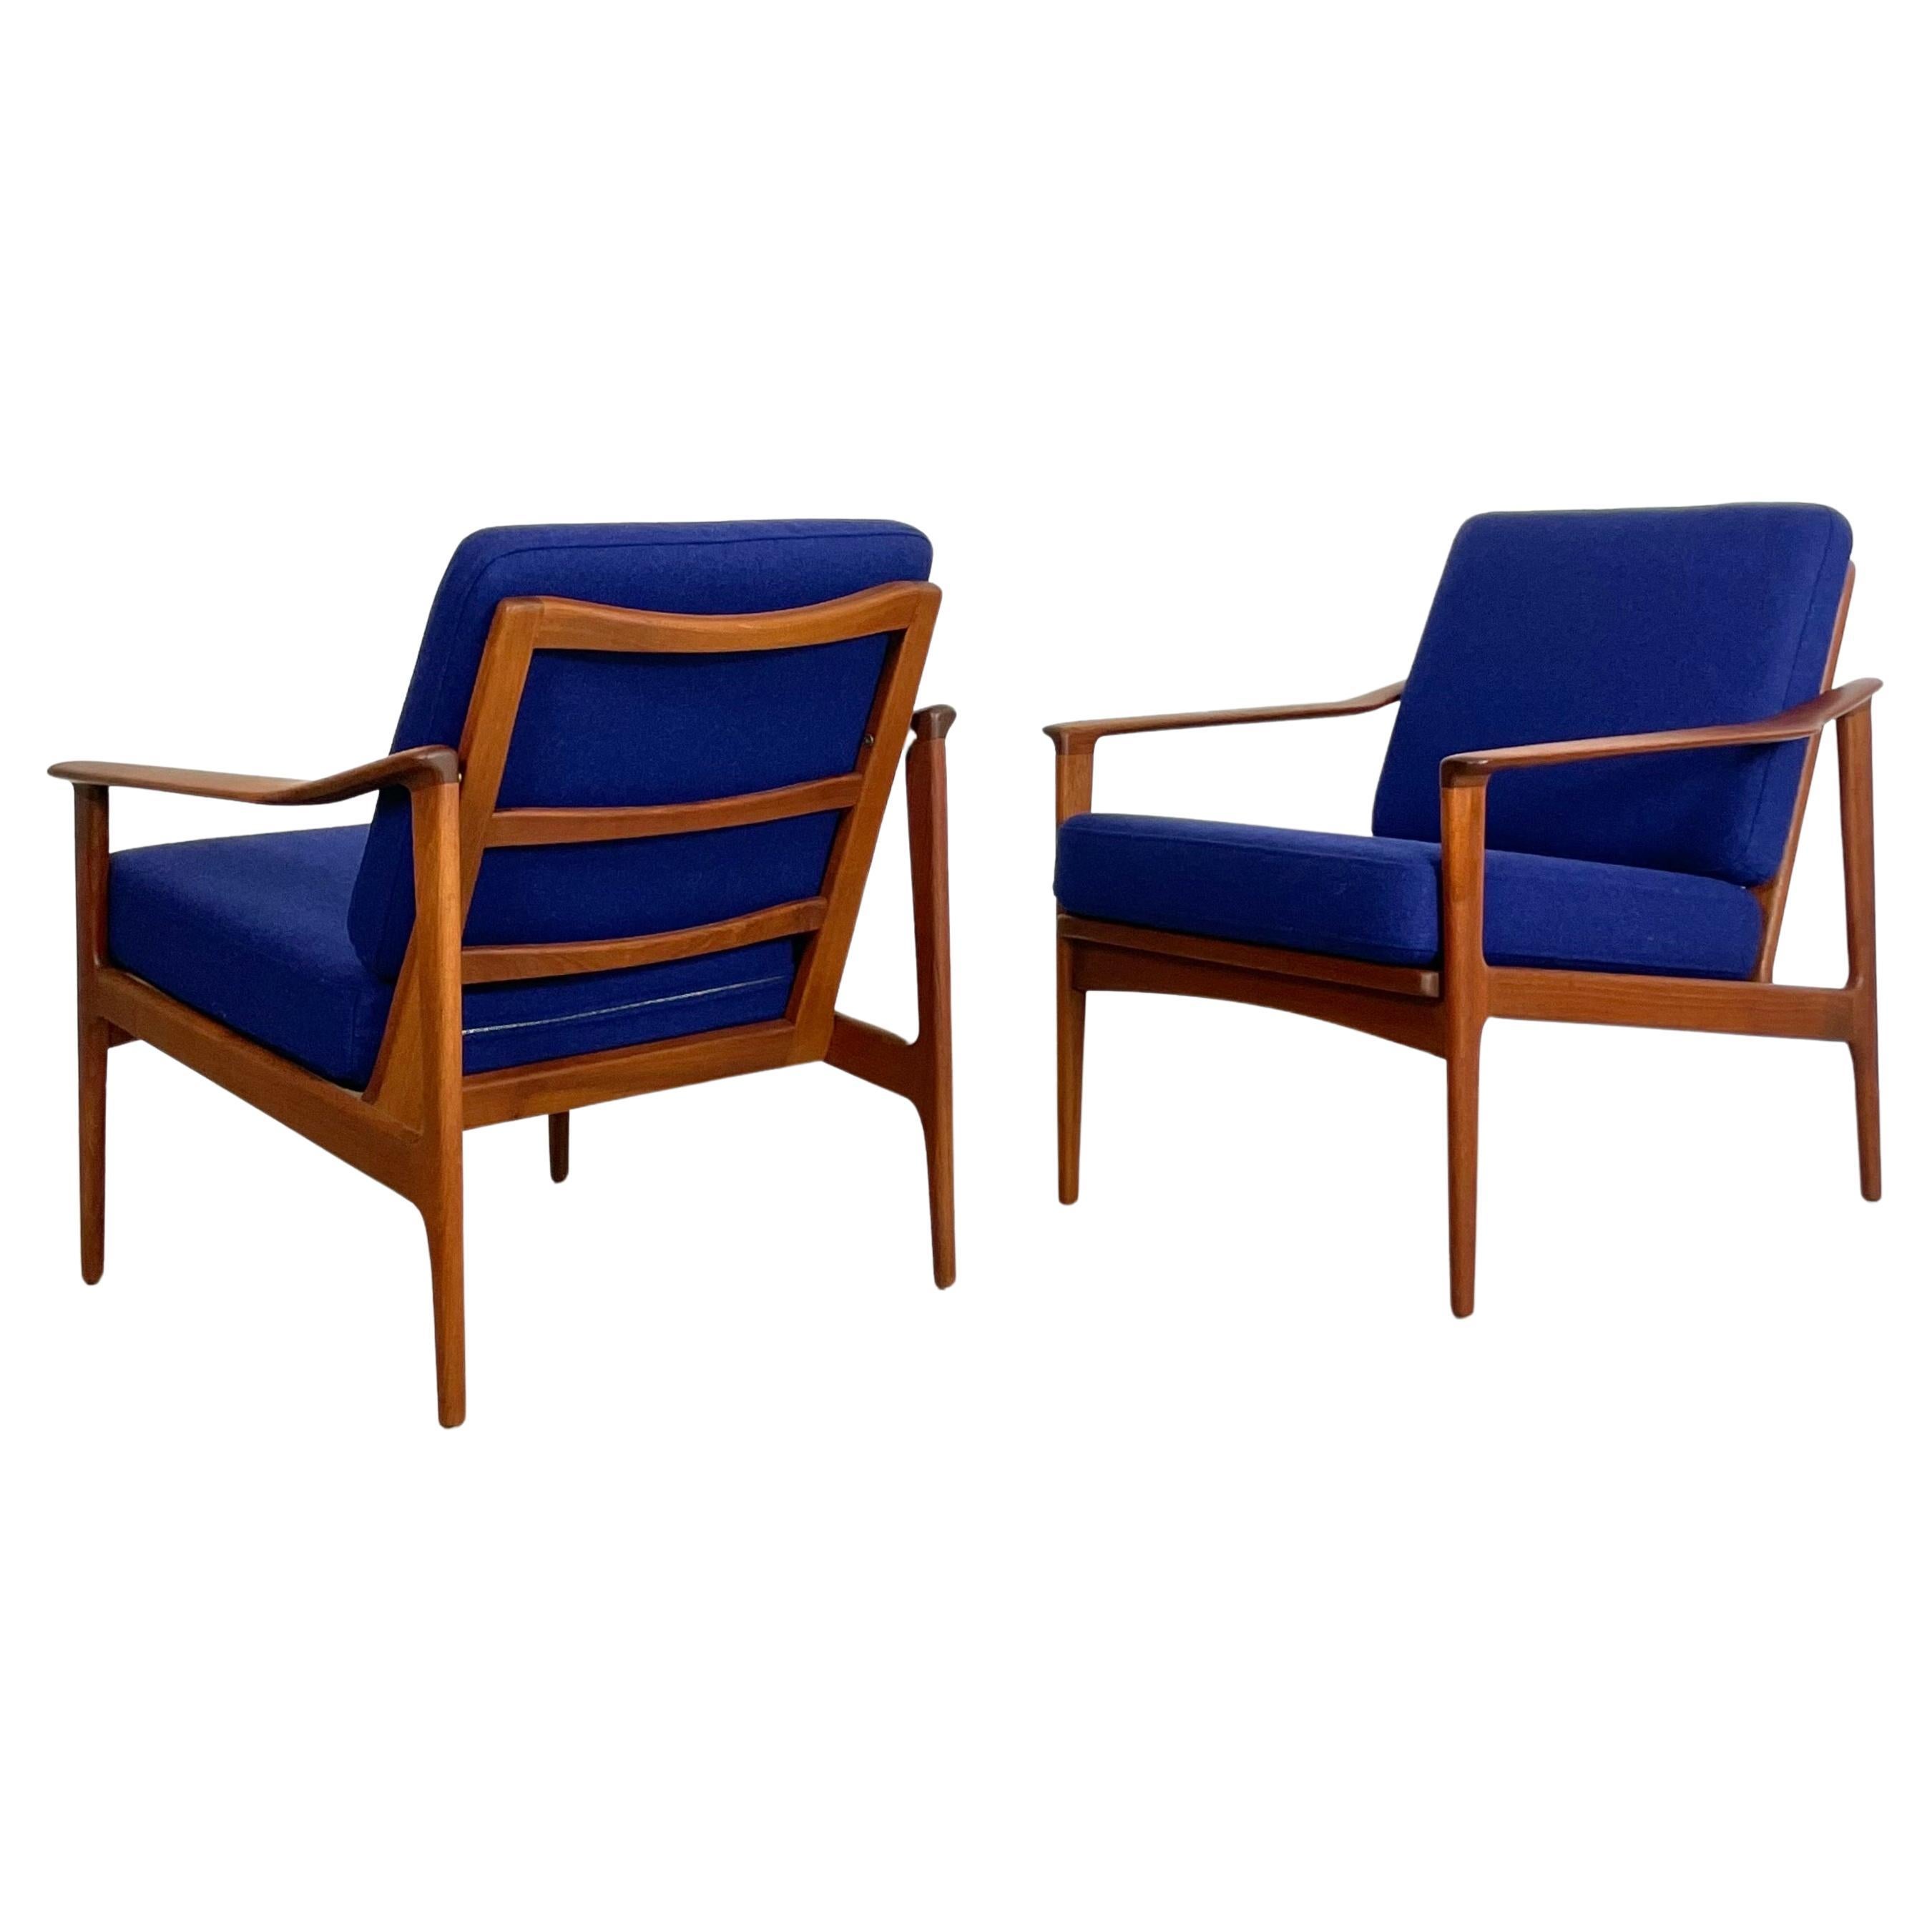 2x Mid-Century Teak Easy Chair by Ib Kofod-Larsen 1960s Denmark For Sale